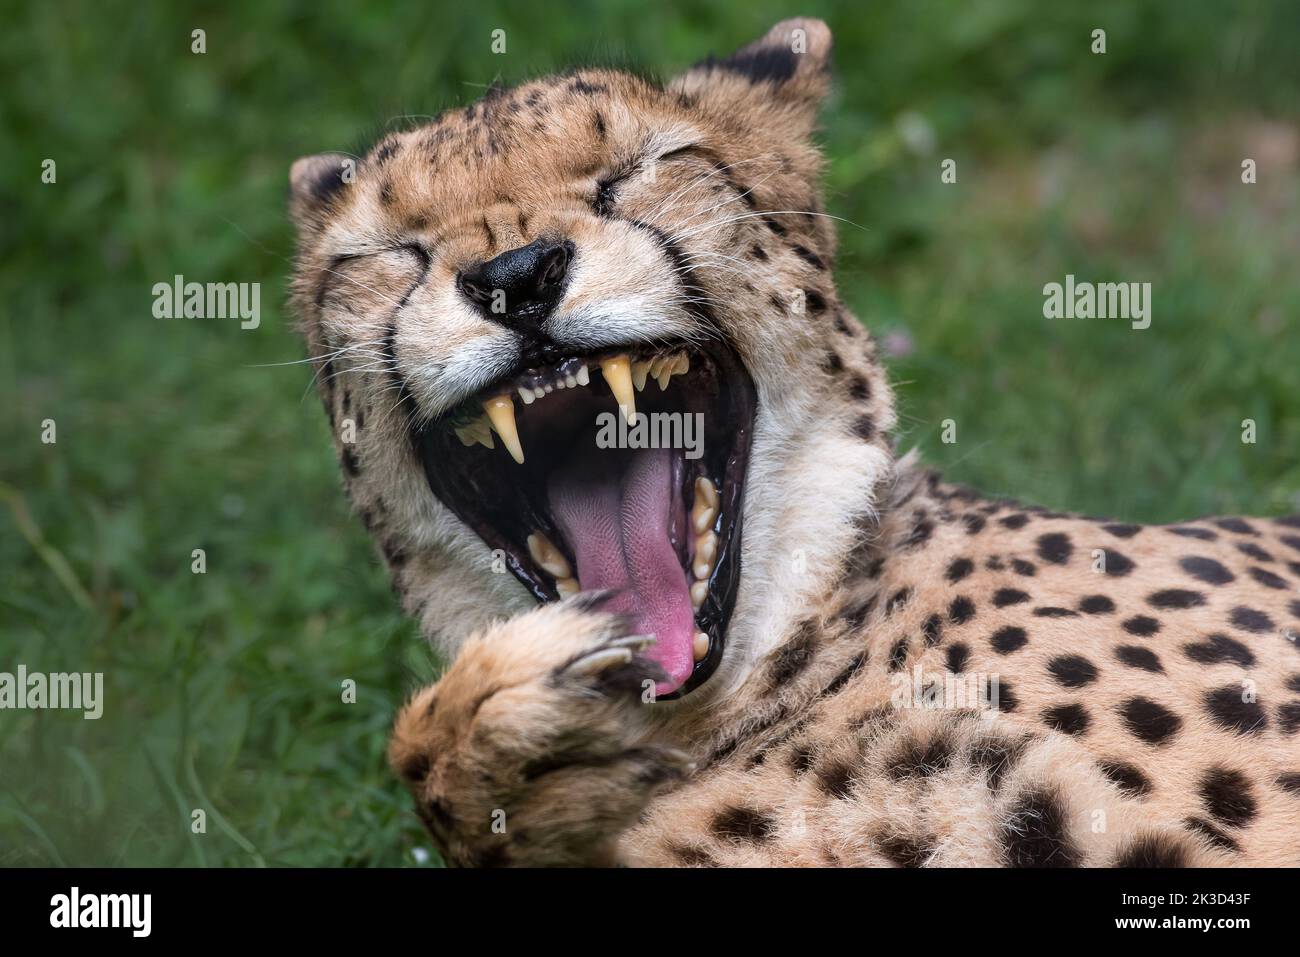 Cheetah yawning Stock Photo